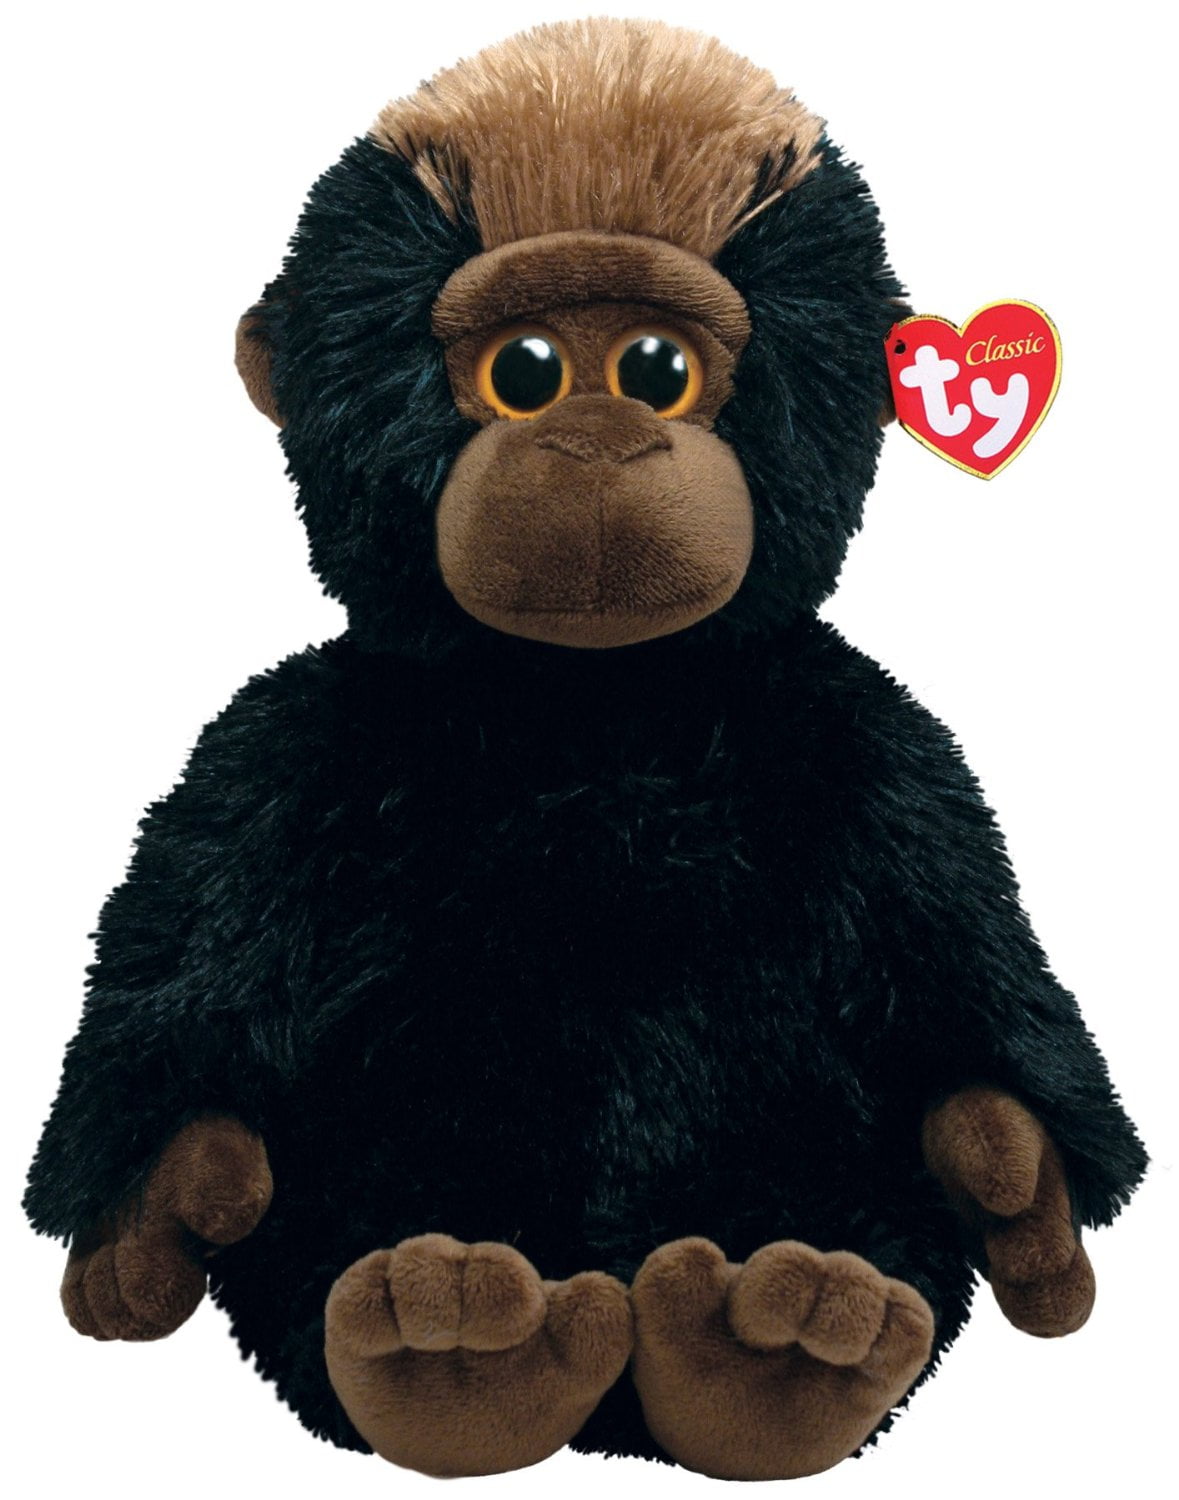 gorilla stuffed animal walmart